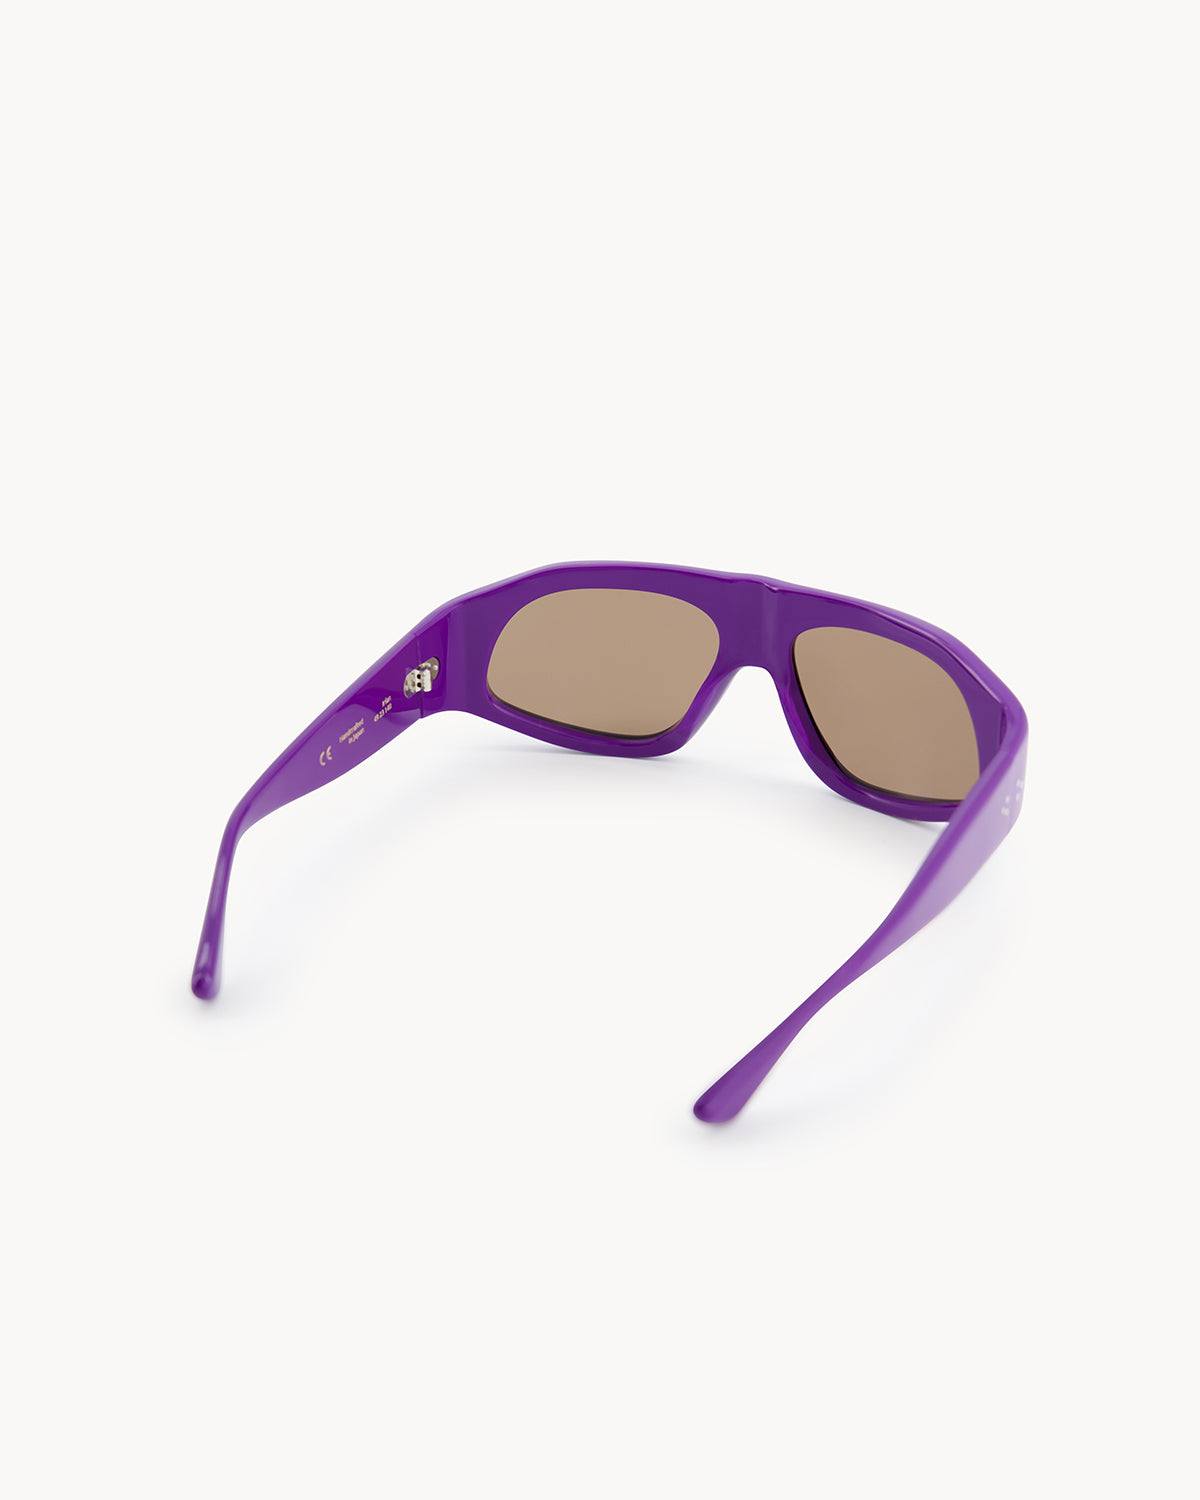 Port Tanger Irfan Sunglasses in Deep Purple Acetate and Black Lenses 3